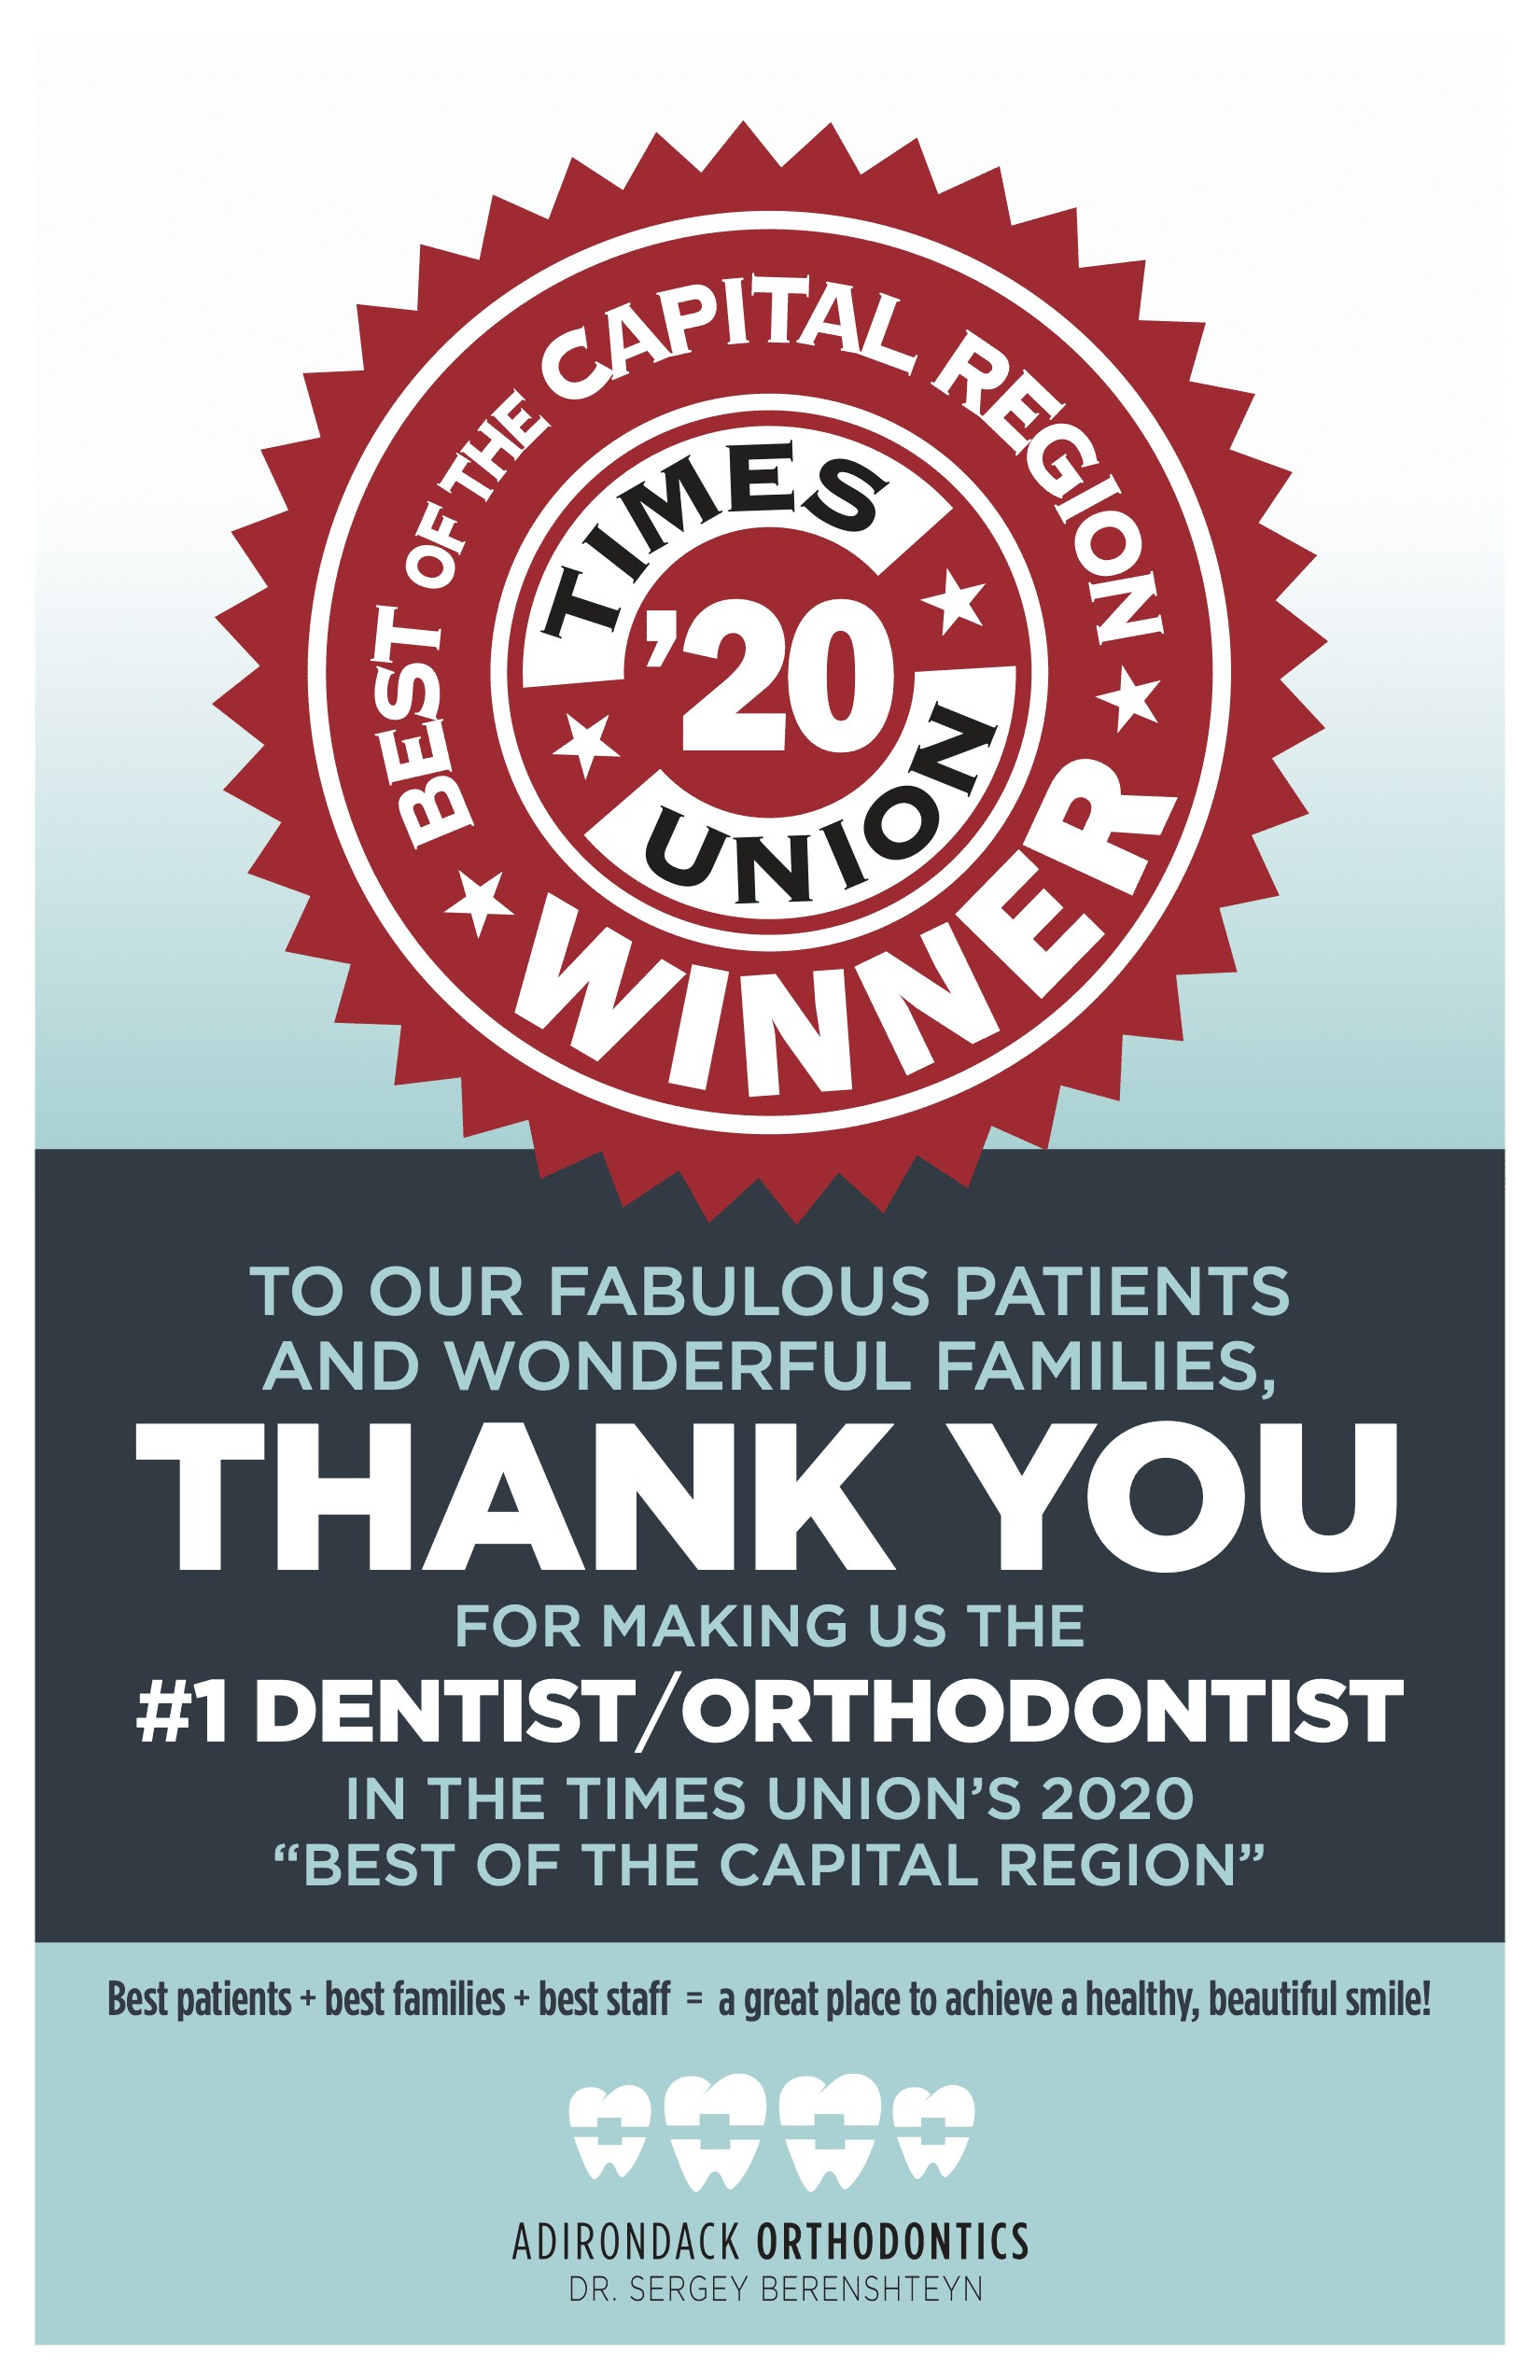 Times Union Best of the Capital Region 2020 - Adirondack Orthodontics